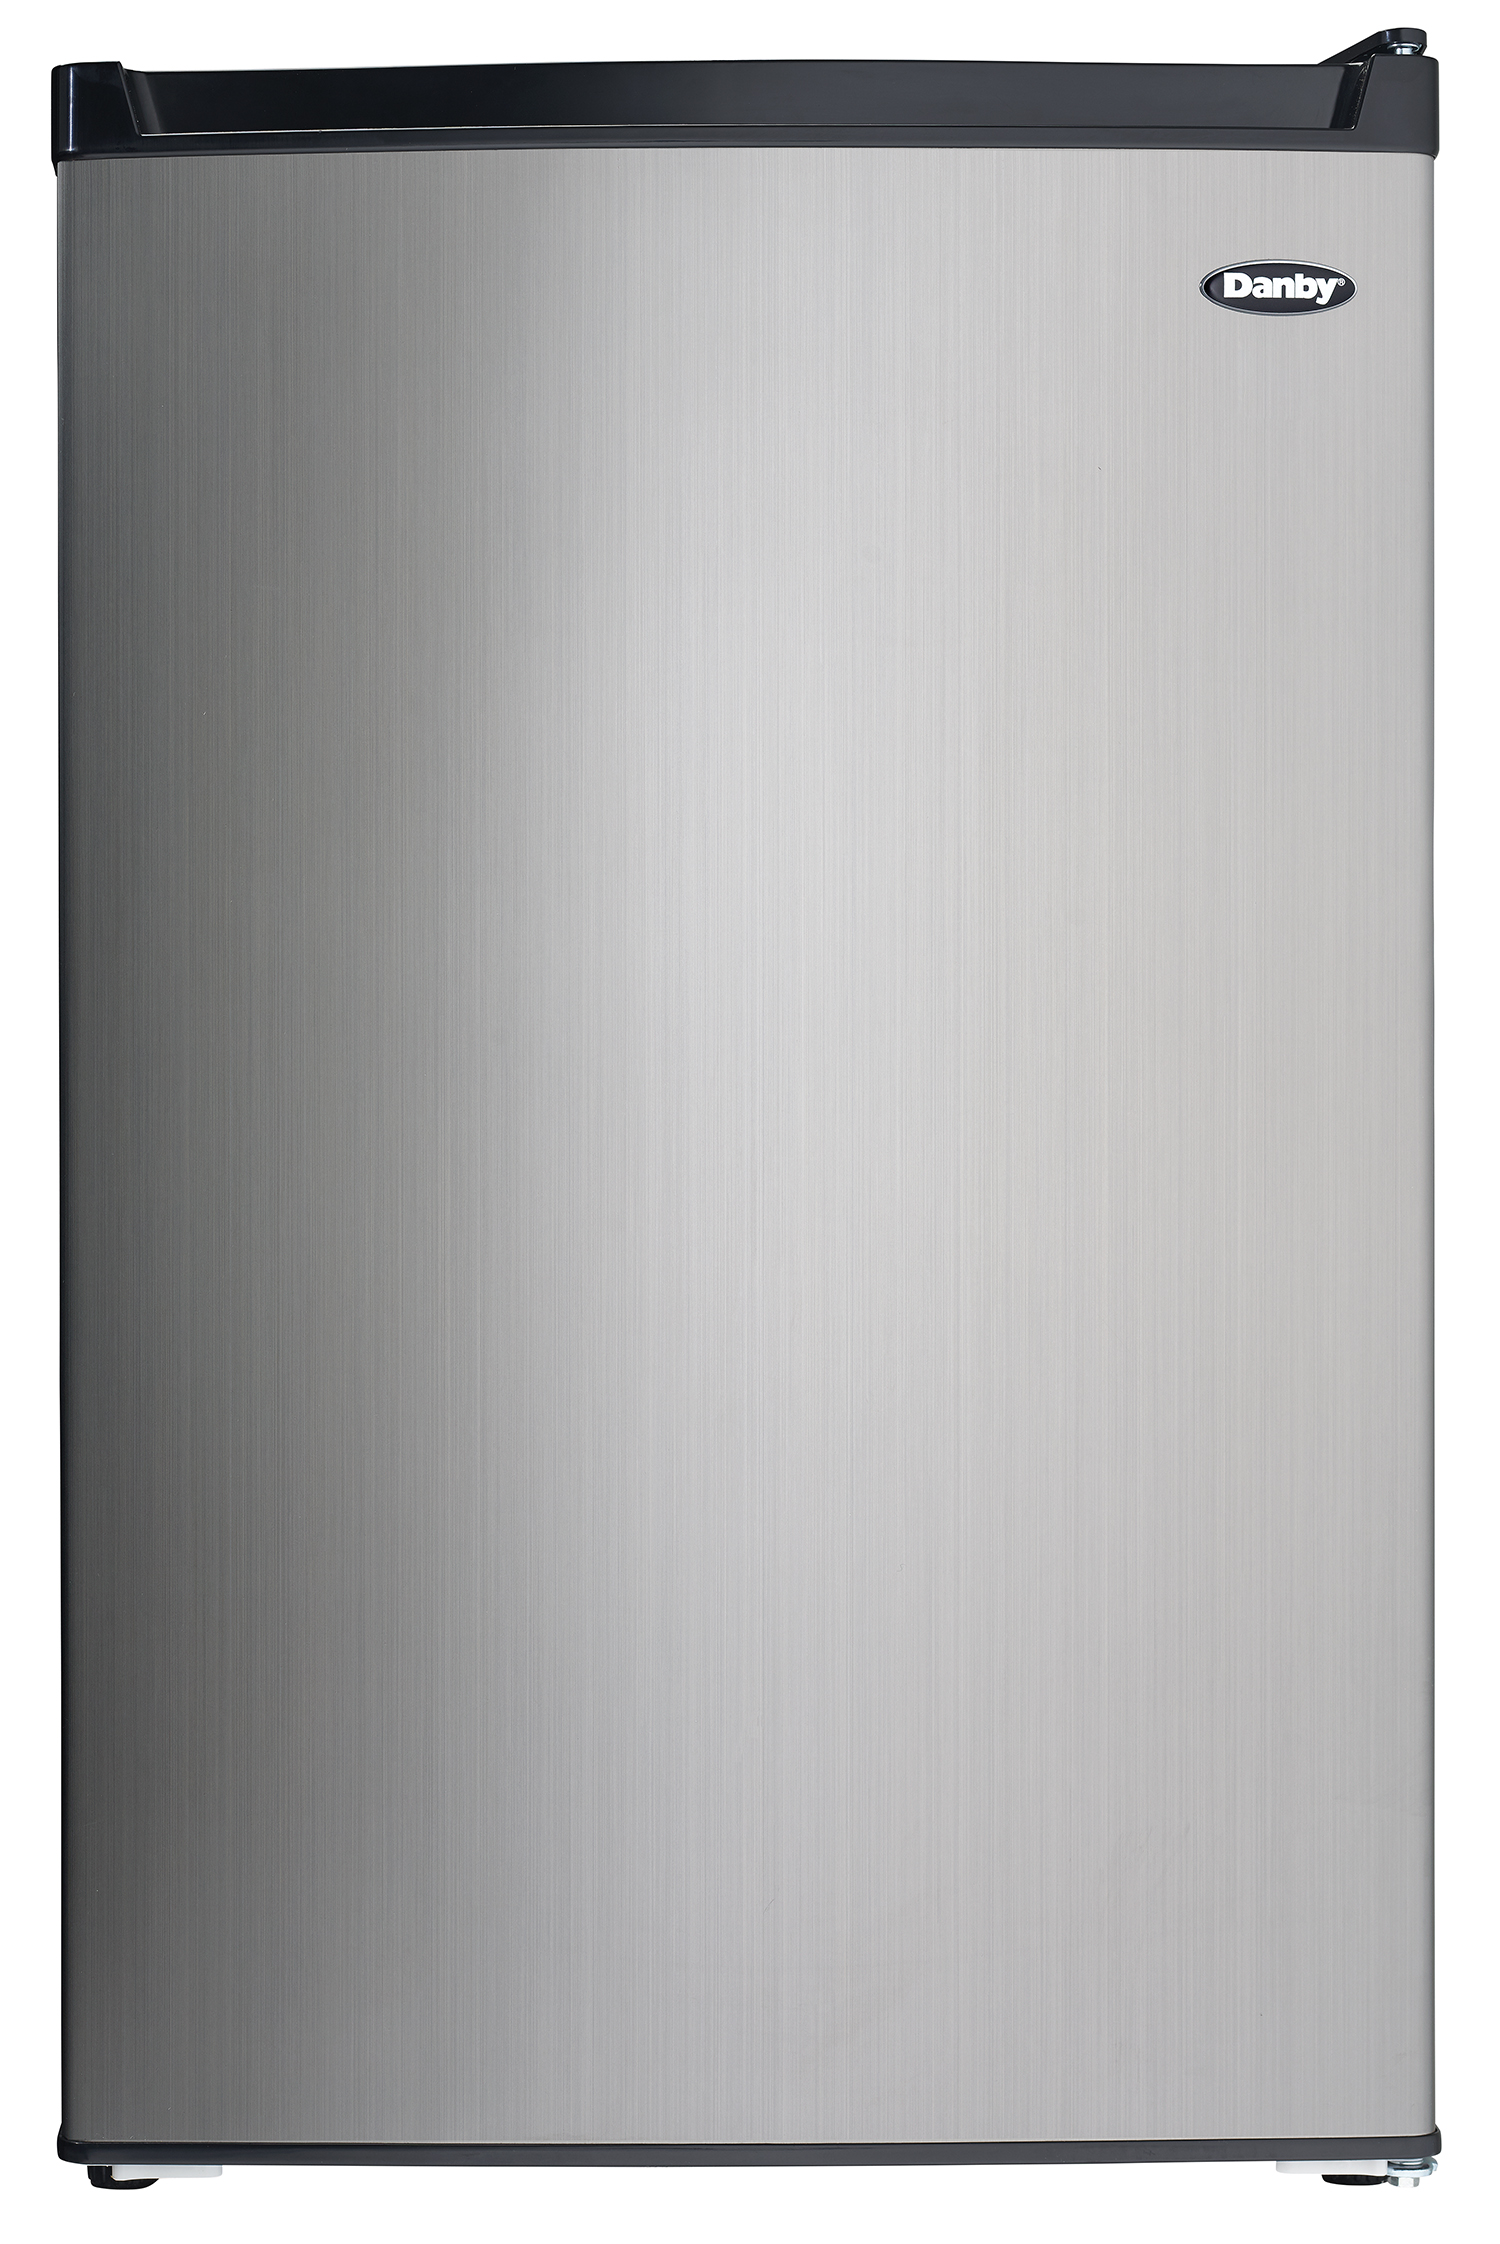 Danby 4.5 cu. ft. Compact Refrigerator with True Freezer